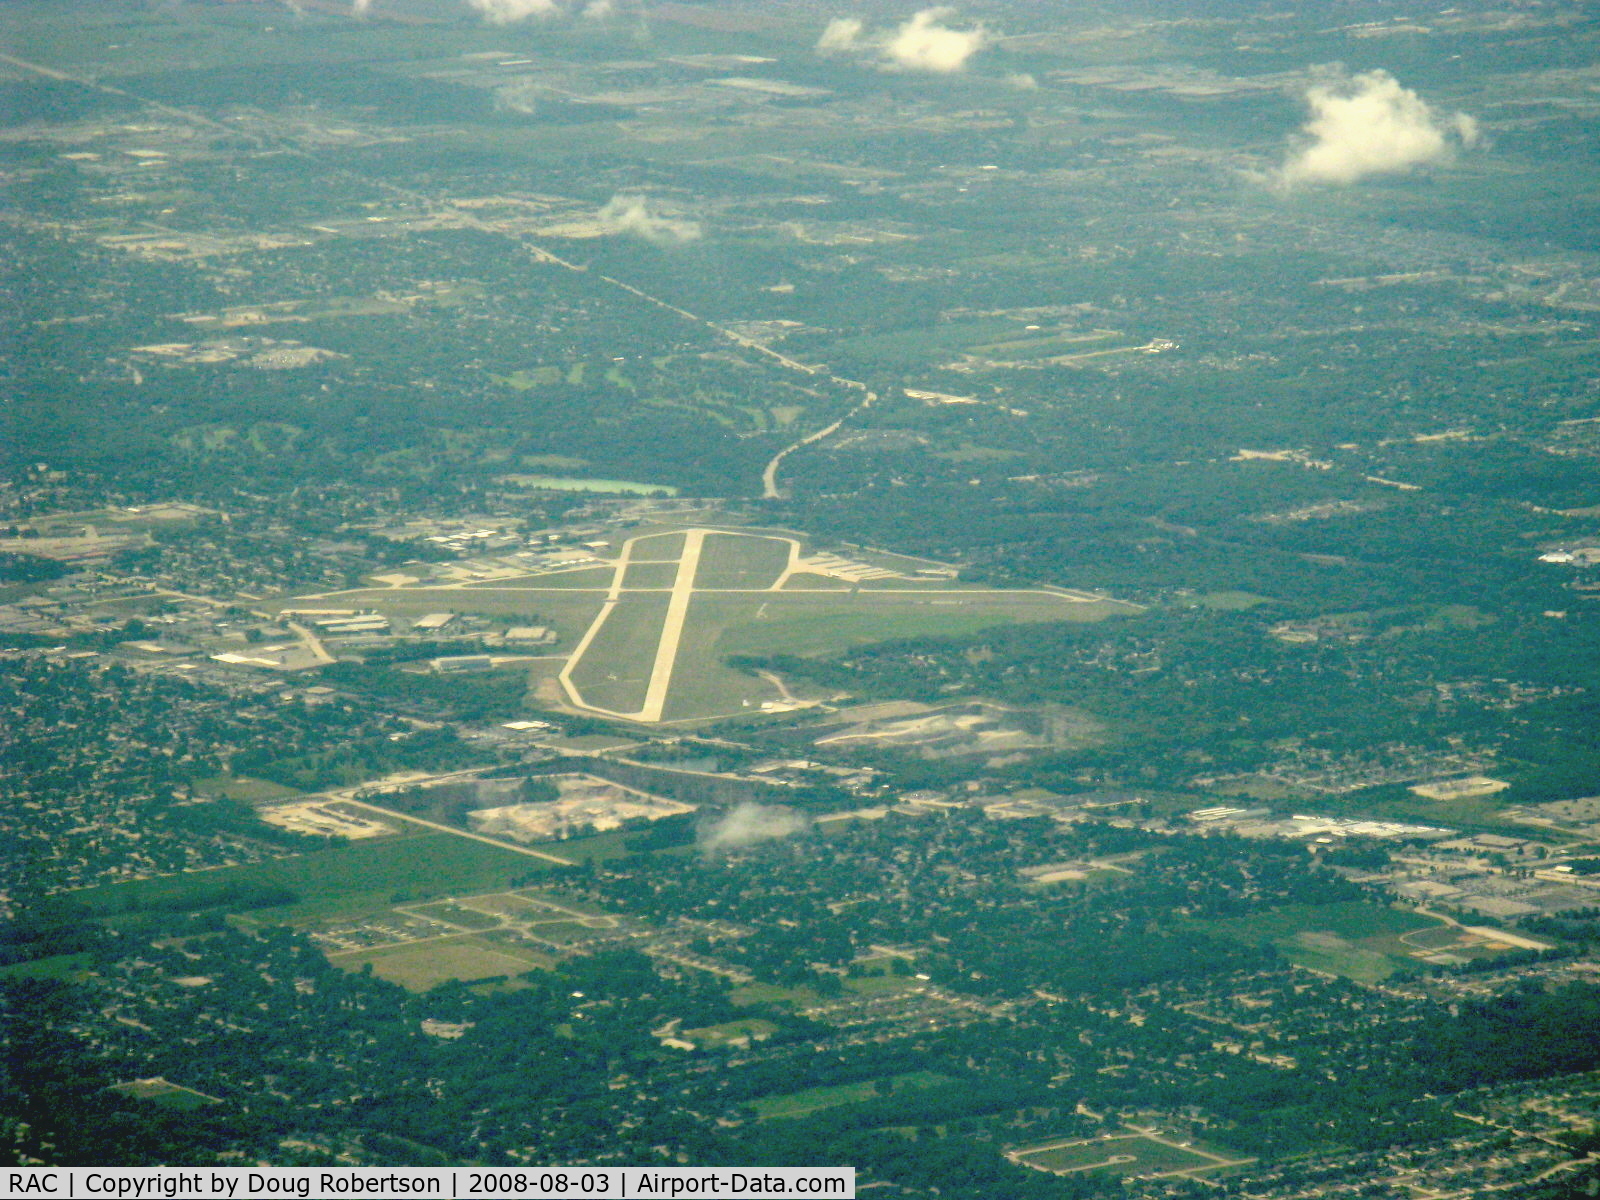 John H Batten Airport (RAC) - John H. Batten, Racine WI. looking southwest 